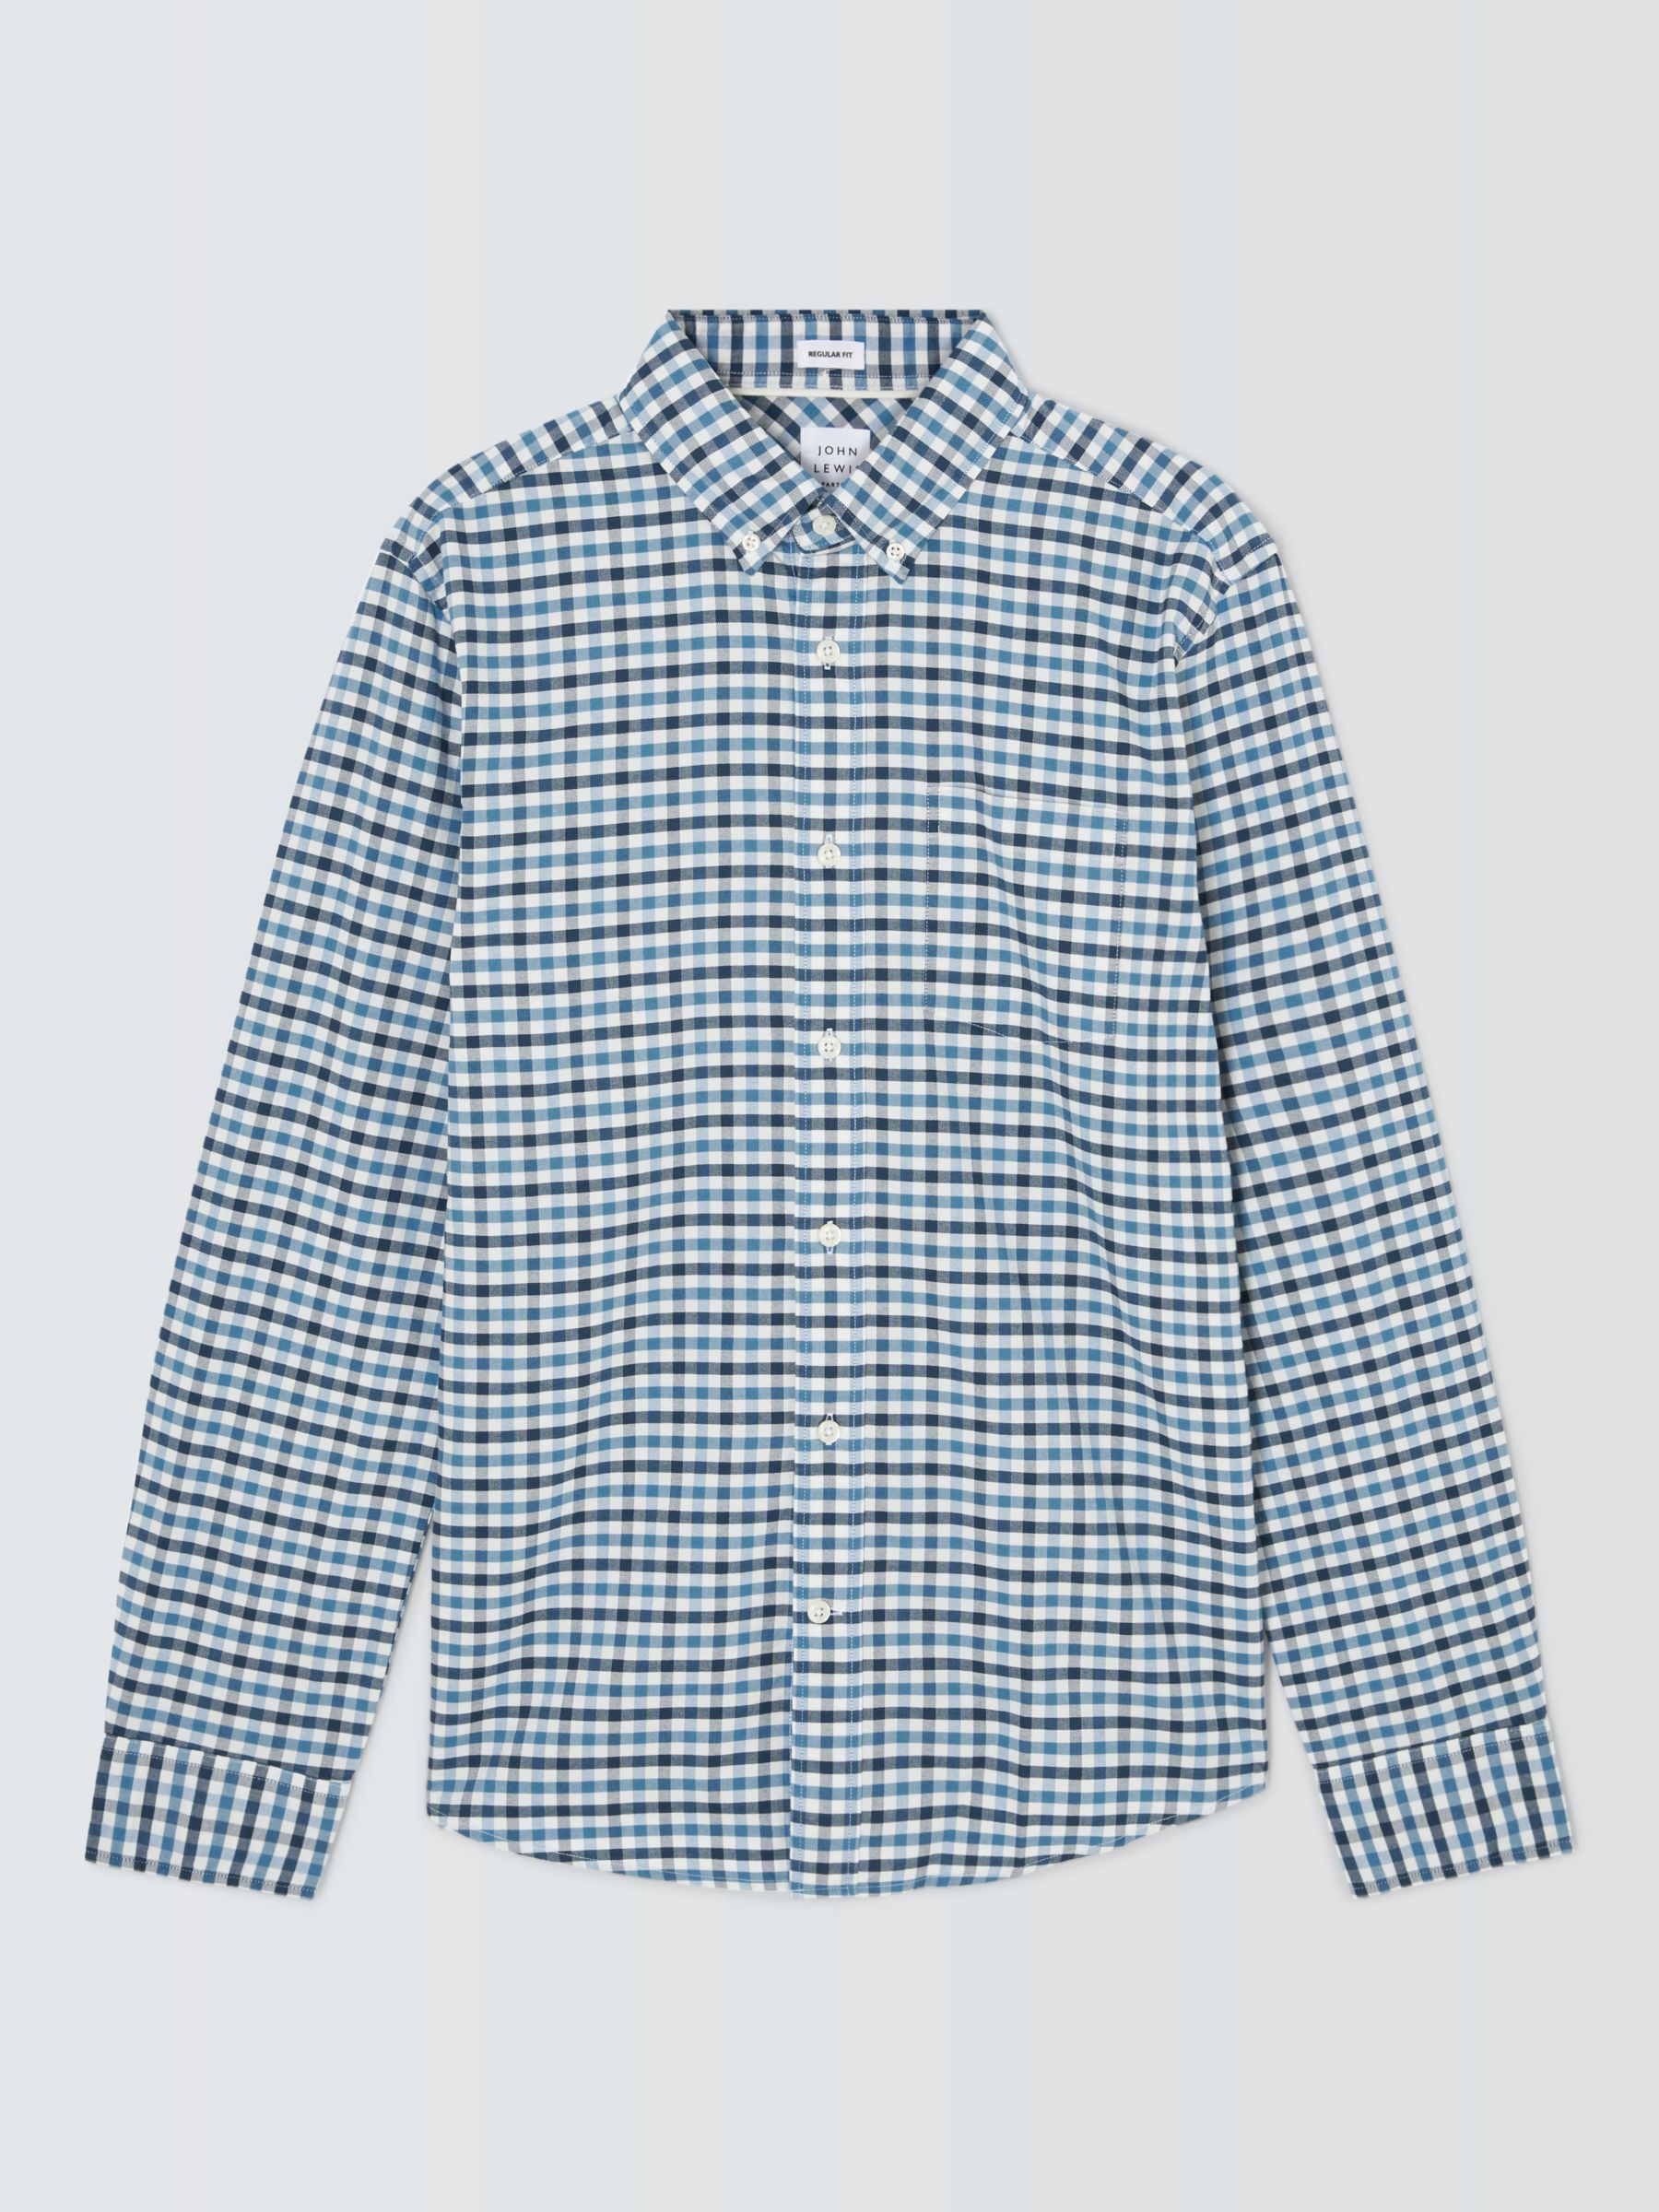 Buy John Lewis Oxford Gingham Long Sleeve Shirt, Blue Online at johnlewis.com